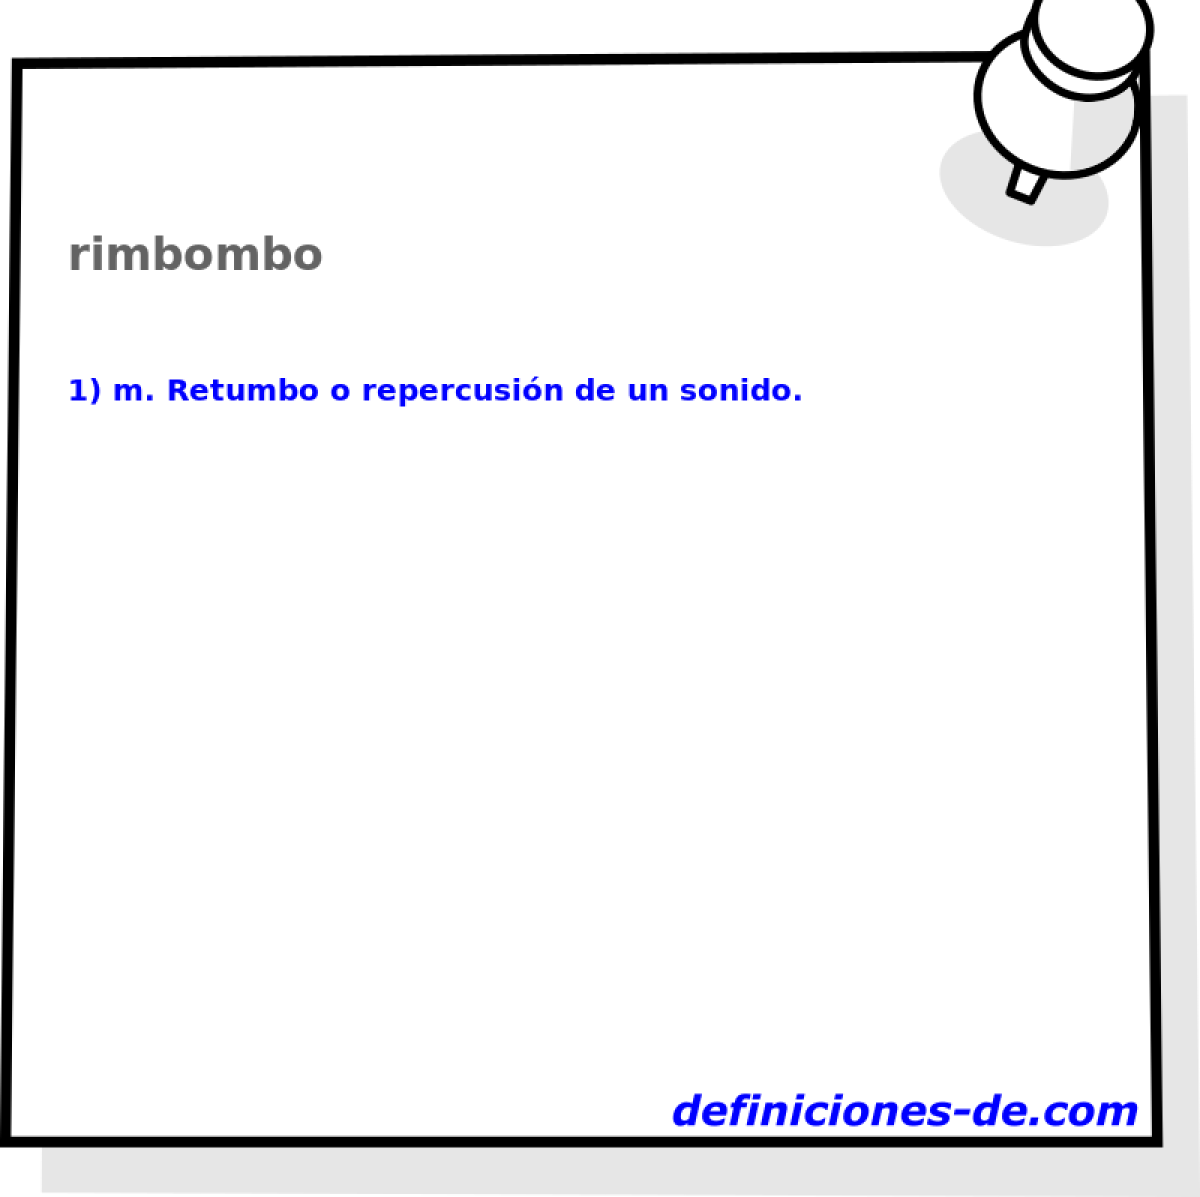 rimbombo 